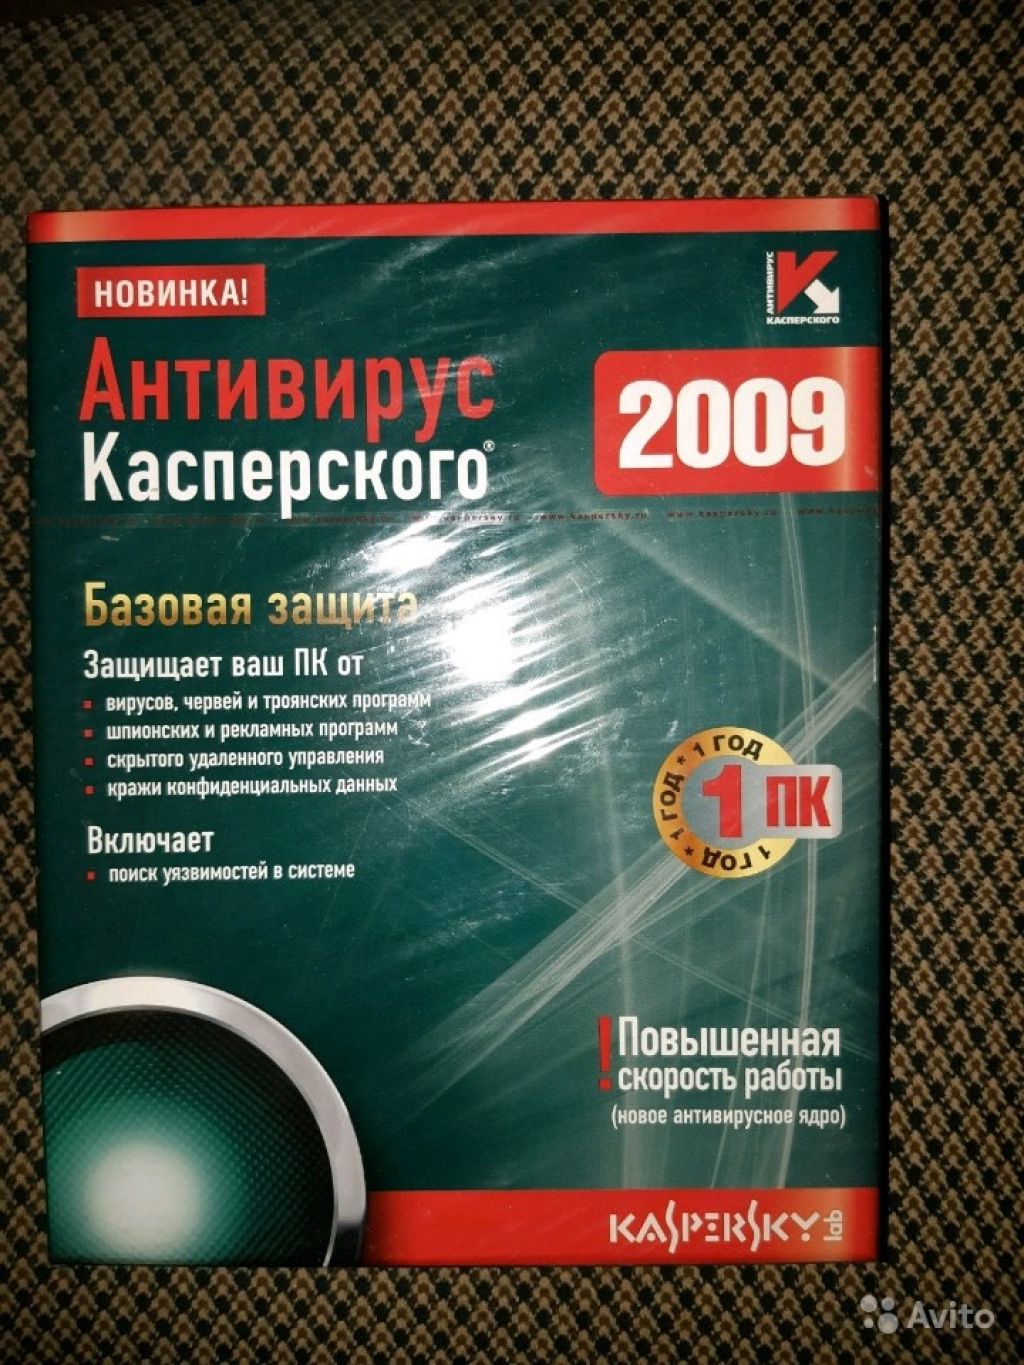 Антивирус Касперского 2009 в Москве. Фото 1